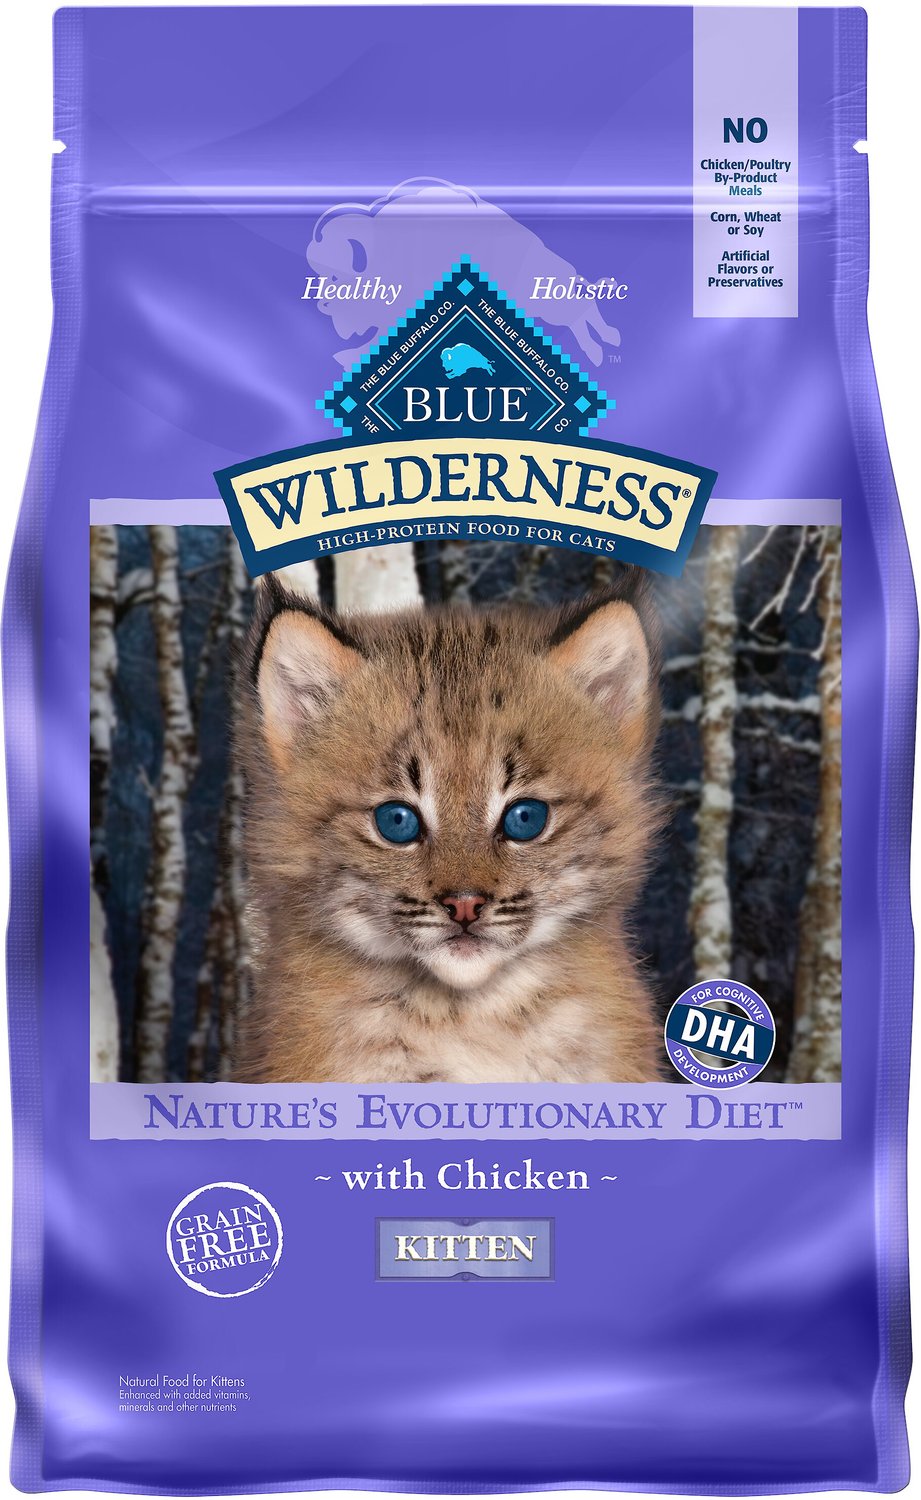 Blue Buffalo Cat Food Feeding Chart